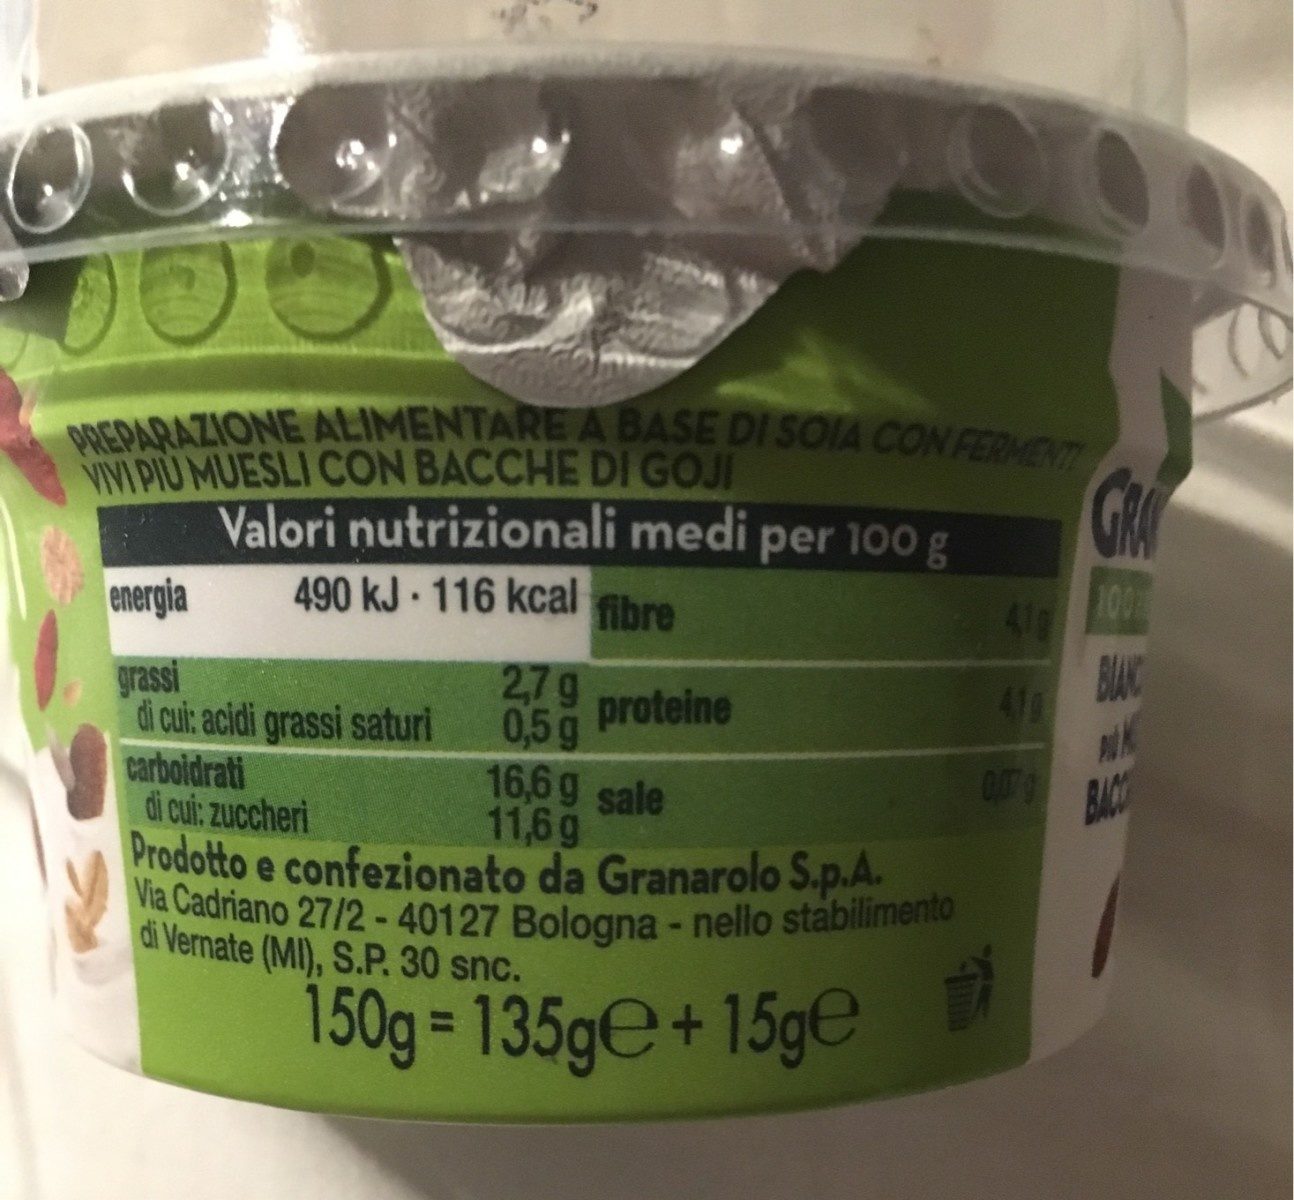 Granarolo 100% Dairy Free -plain Yogurt Alternative - Valori nutrizionali - fr